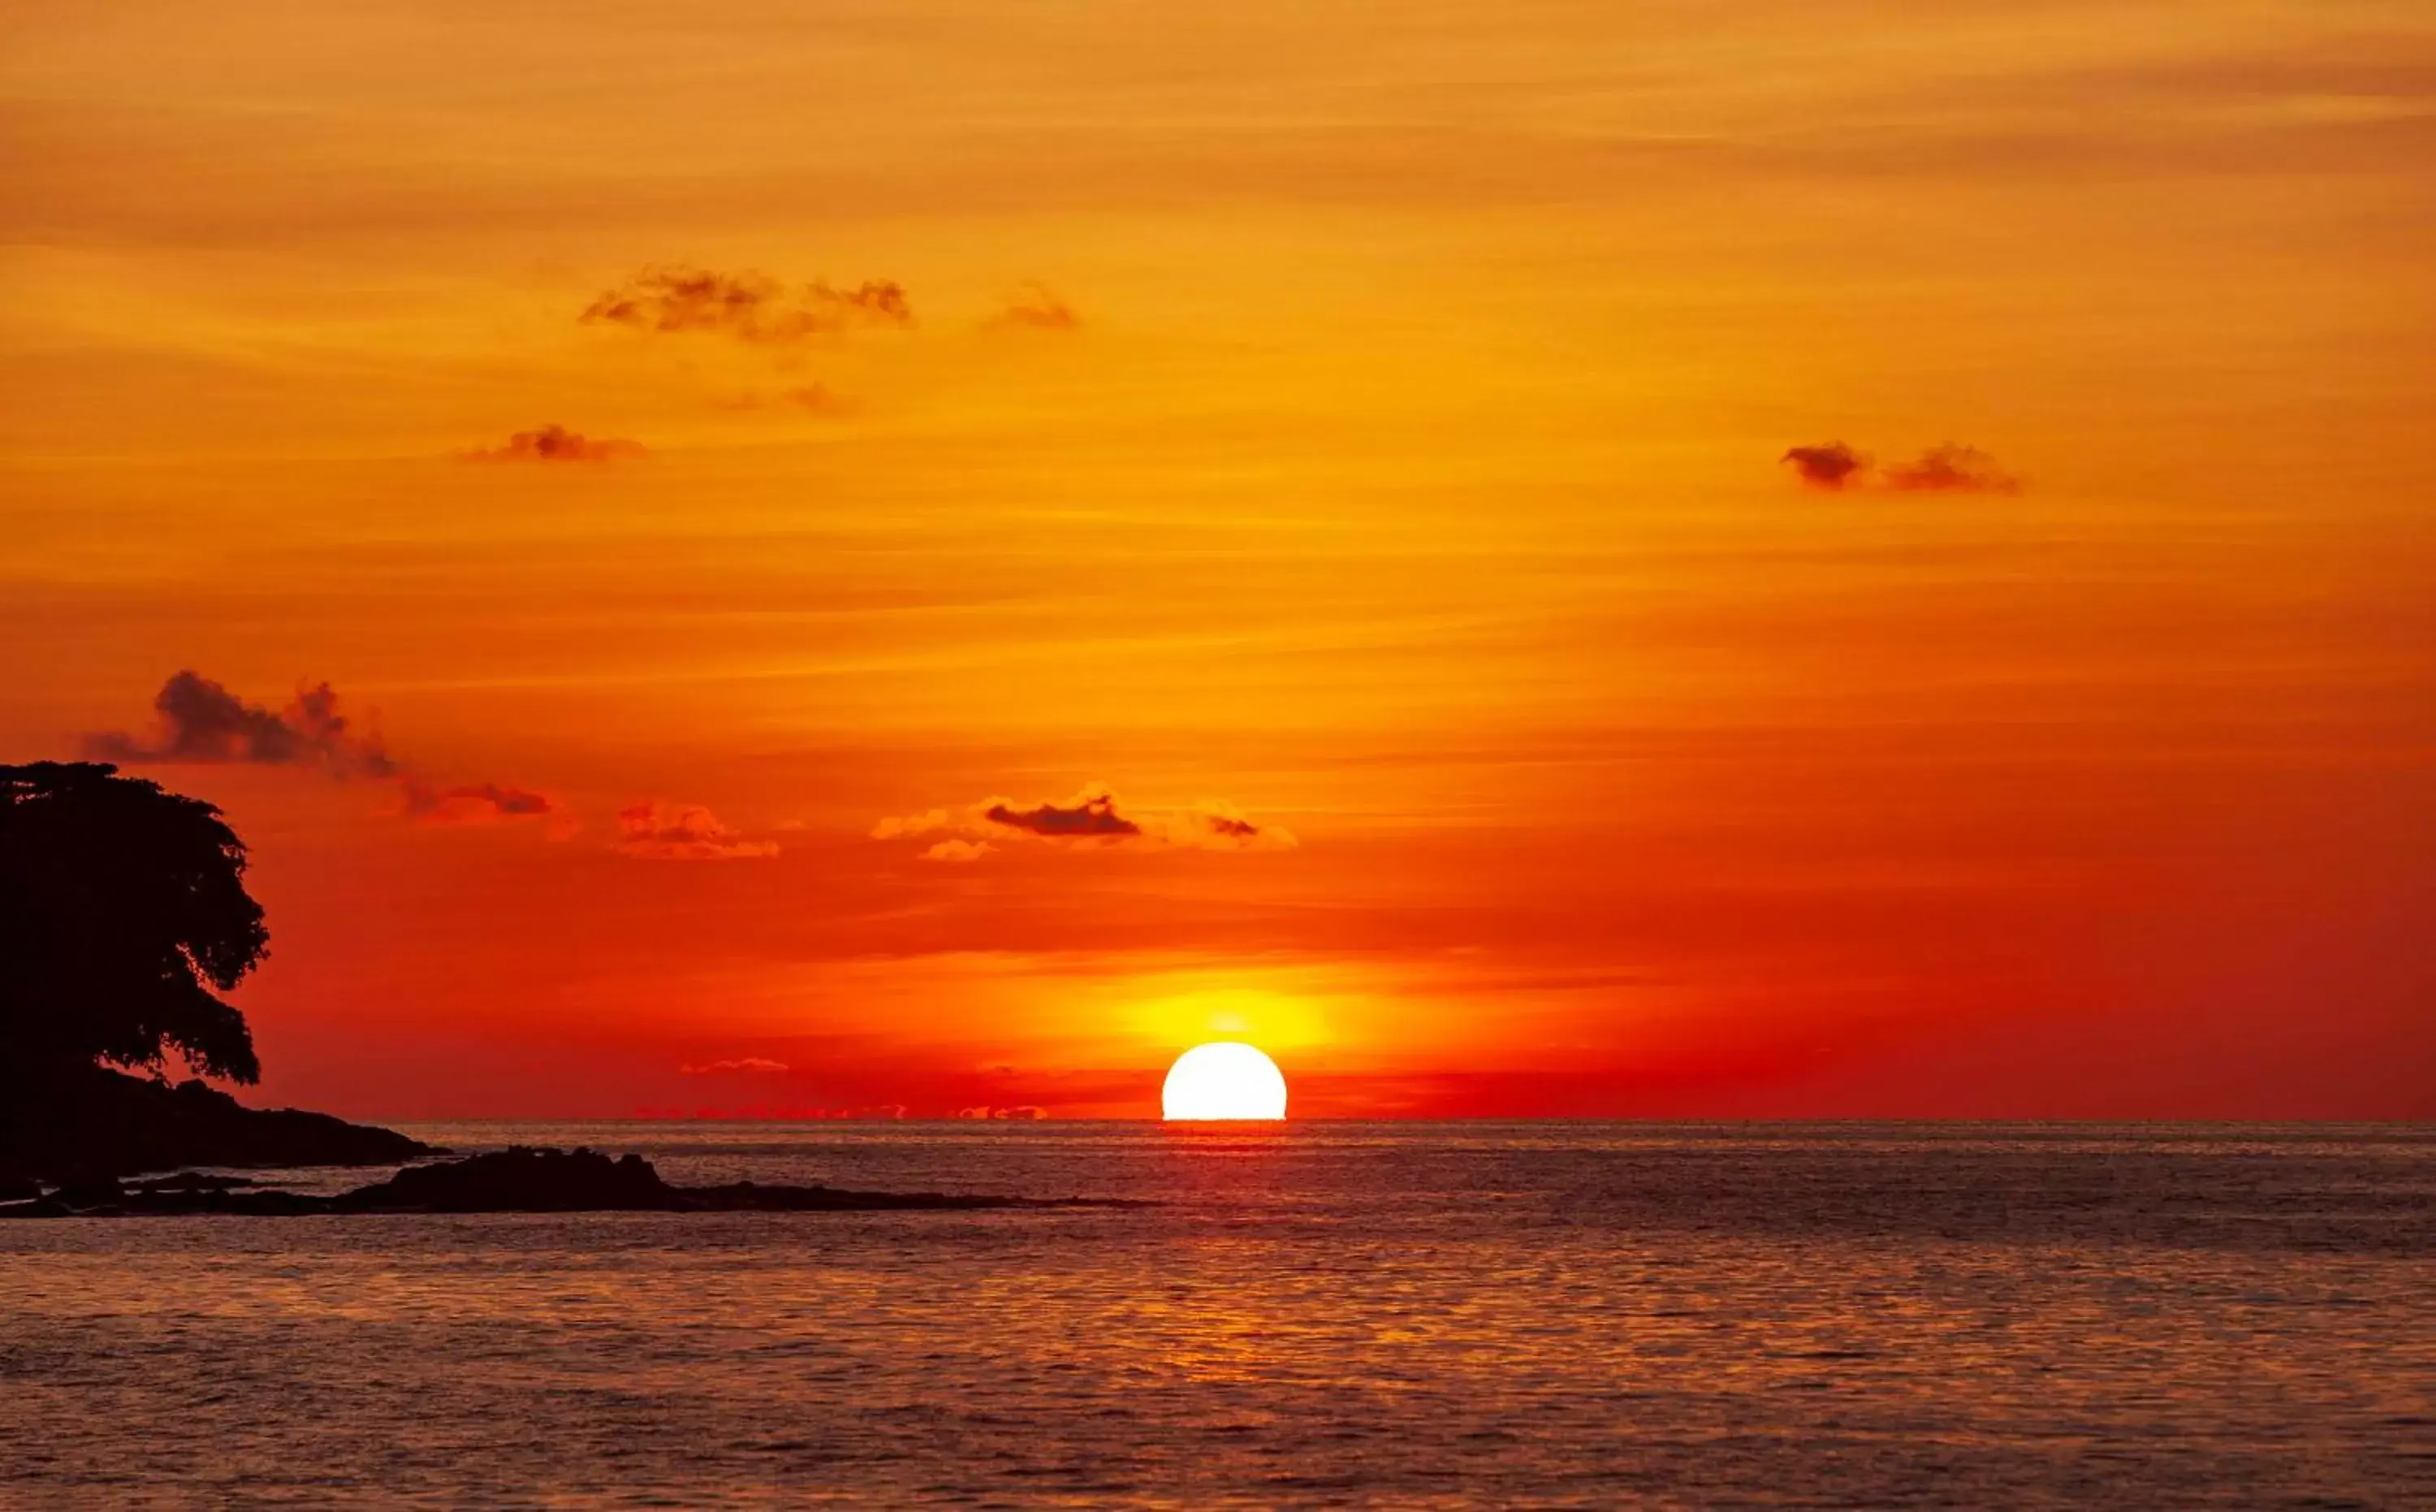 Sea view, Sunrise/Sunset in Fisherman's Cove Resort